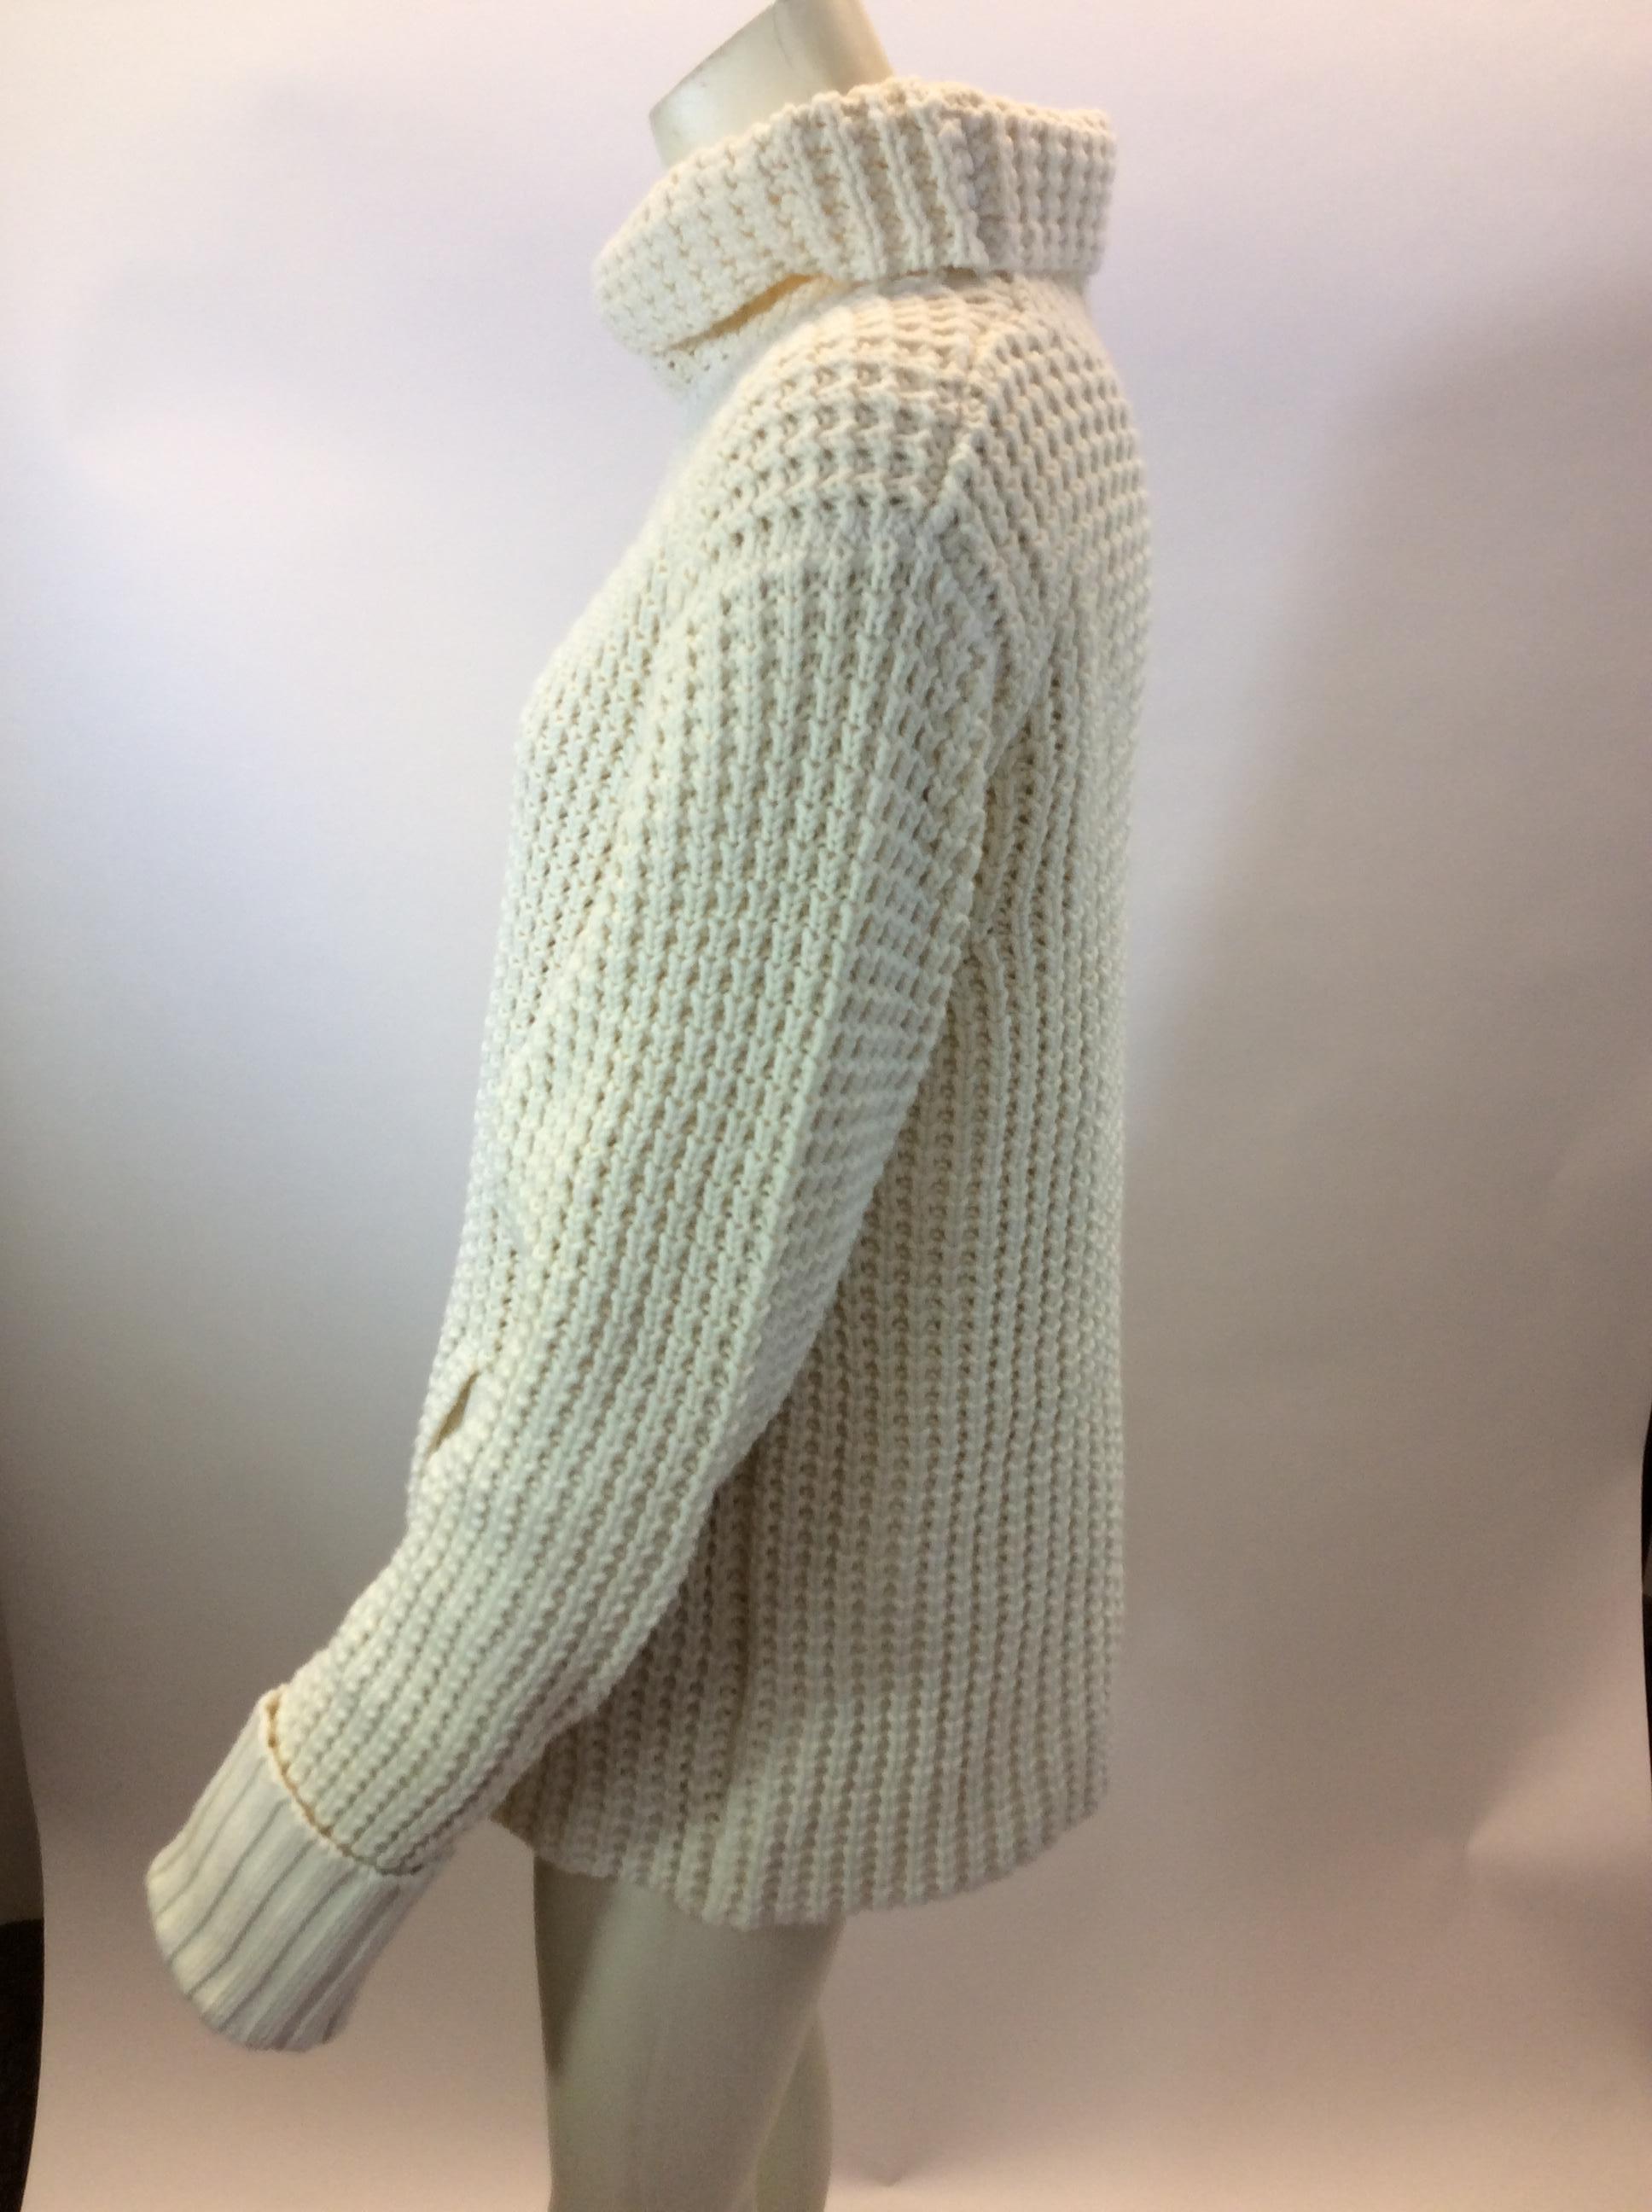 Lauren Hansen Off White Knit Sweater
$98
53% Acrylic, 47% Cotton
Length 24